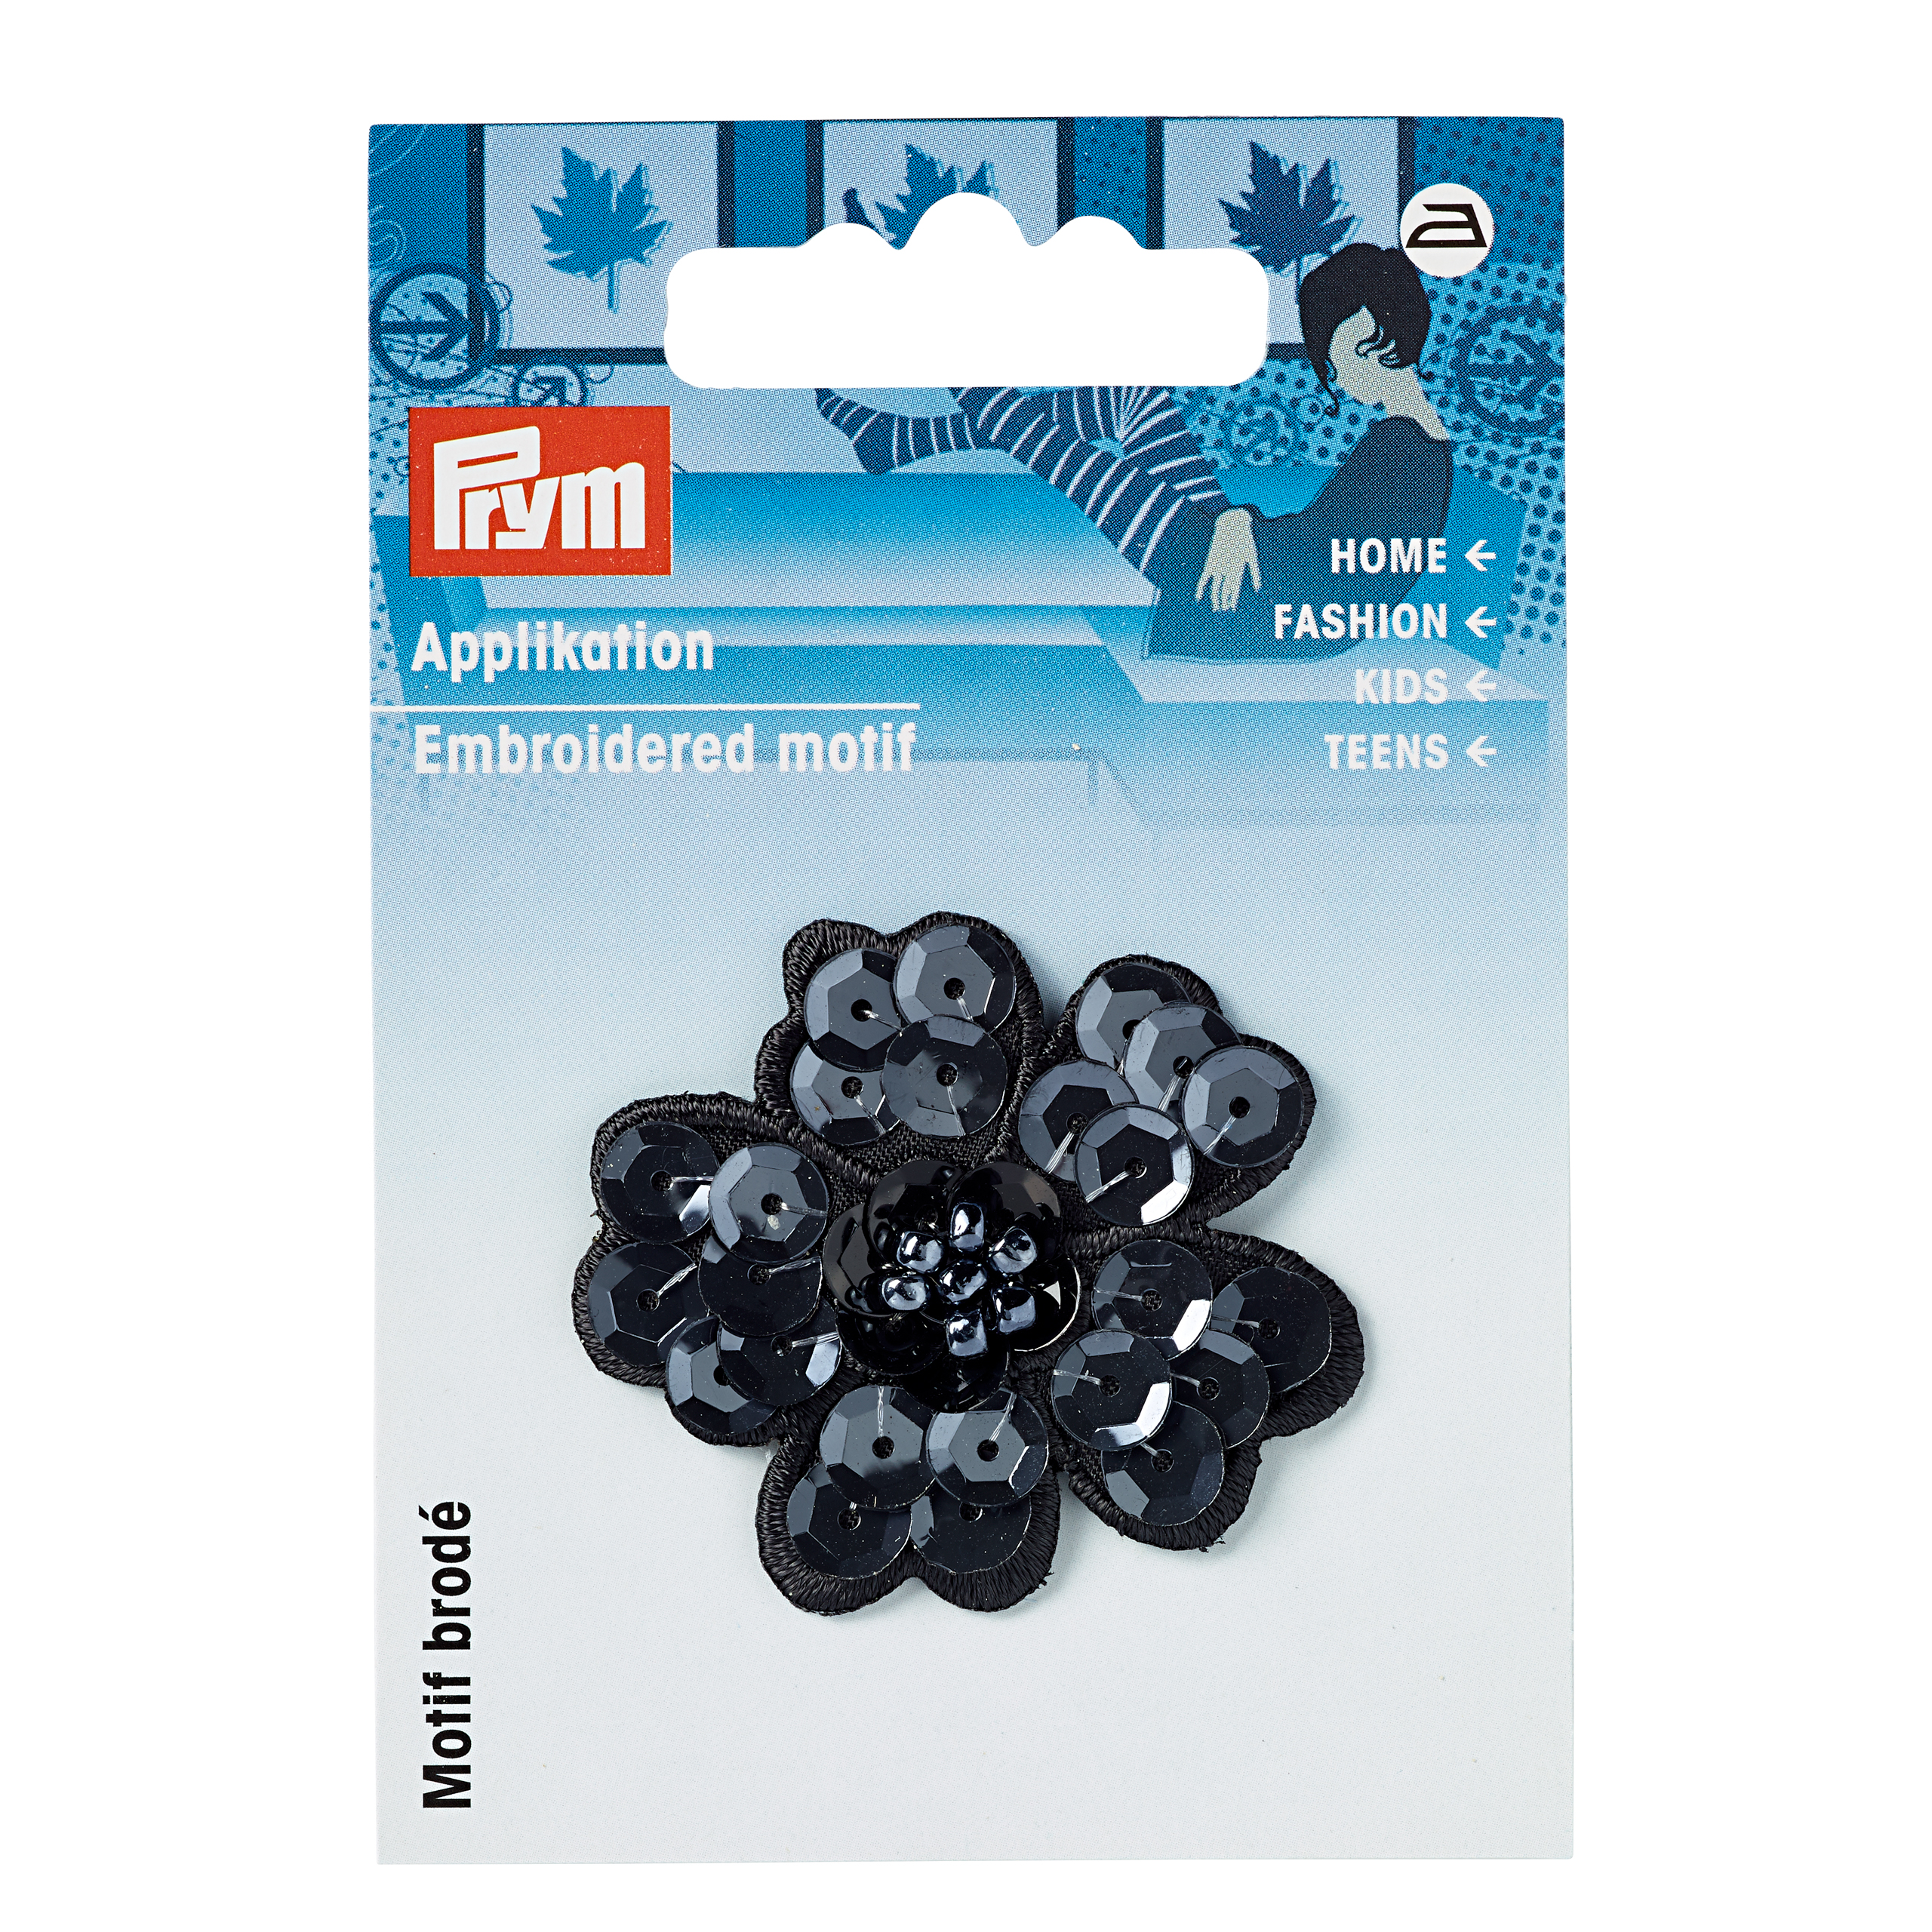 Applikation Paillettenblume schwarz, 38 x 40mm, 1 St